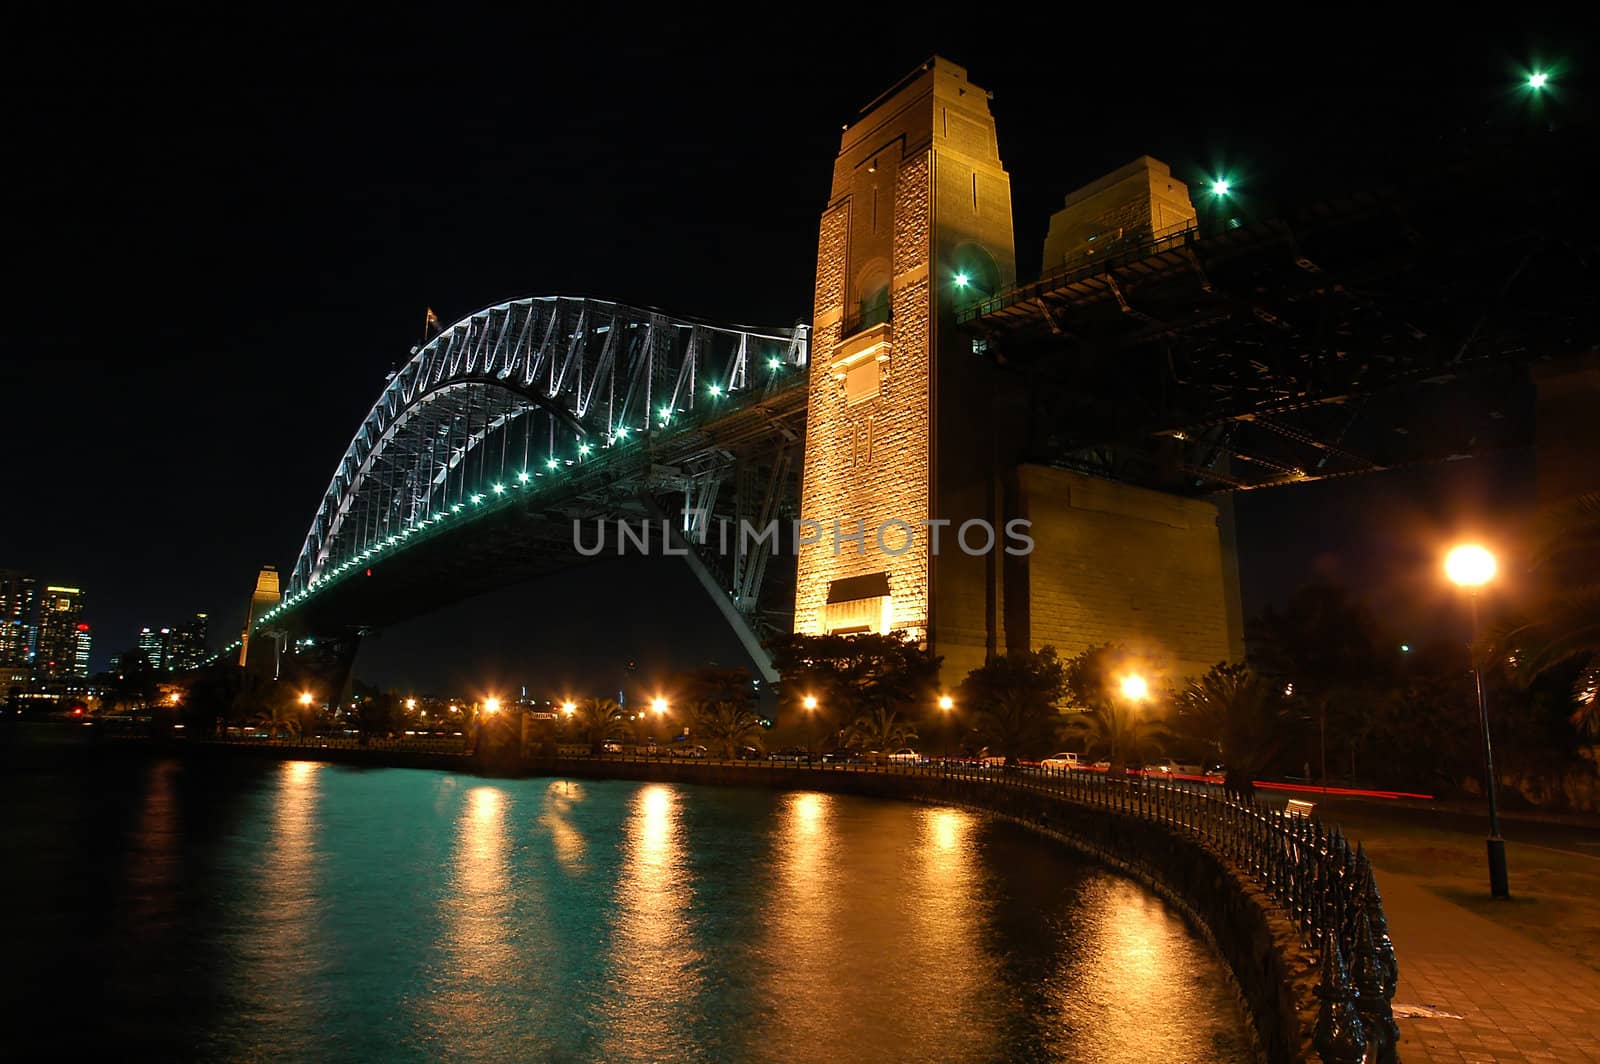 night scene of Harbour Bridge, lights reflected in water, photo taken from Kirribilli